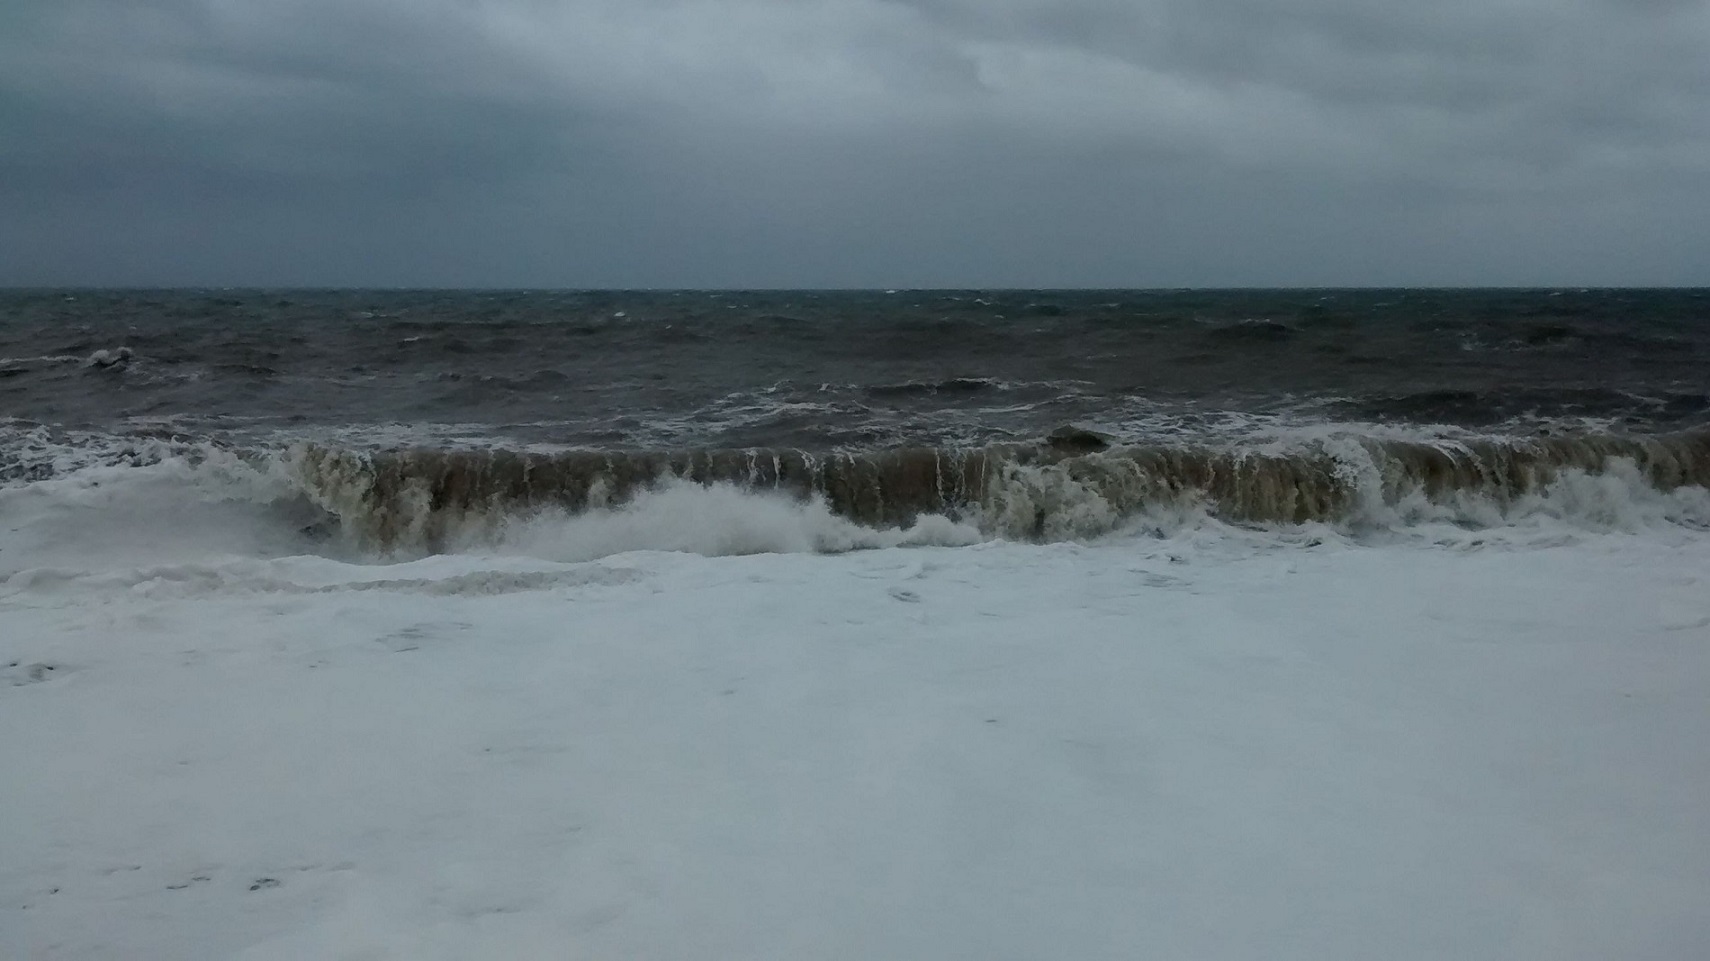 A stormy sea hurls waves against a beach, with white surf run up the beach under a dark cloudy sky.